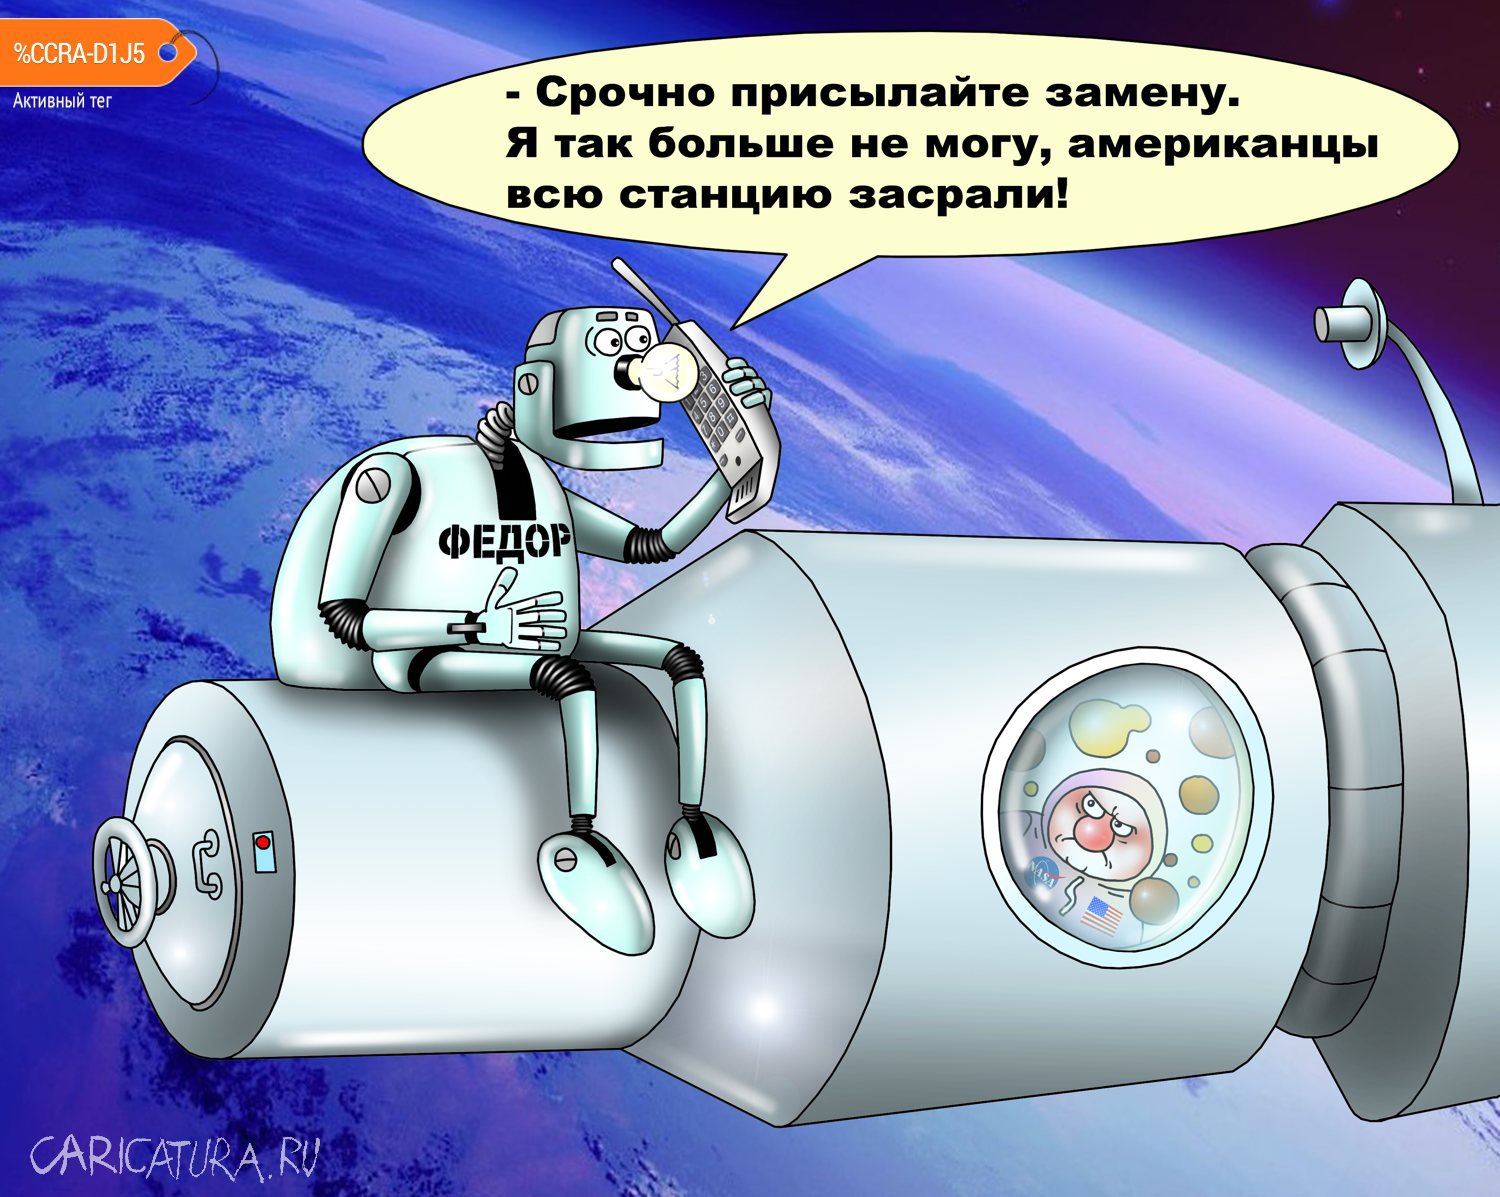 karikatura-novyi-robot-roskosmosa_(sergey-korsun)_1985.jpg